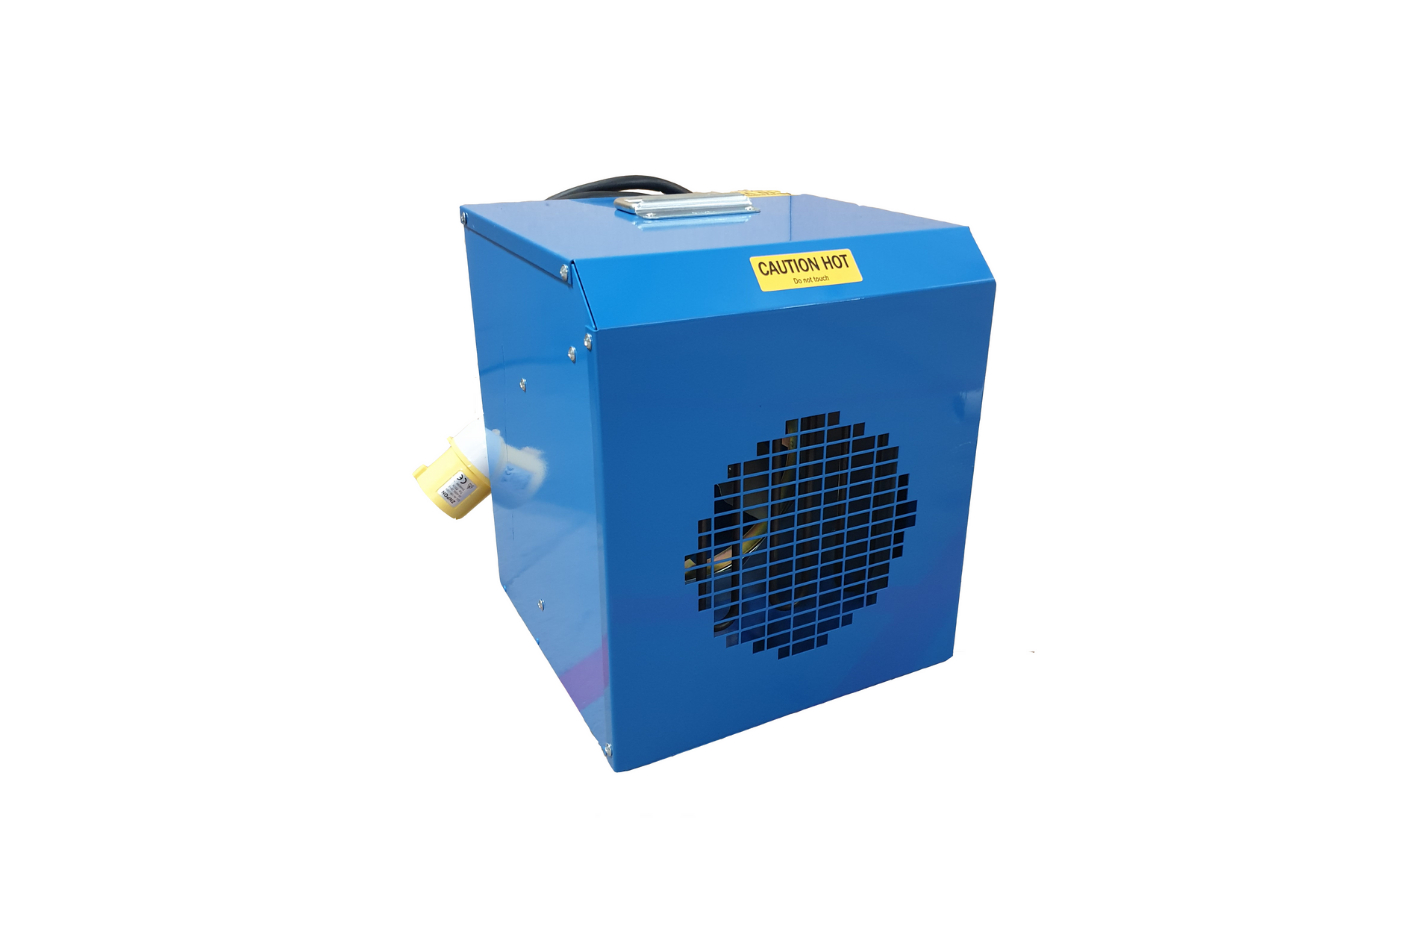 Climex Fan Heater 3 Electric Fan Heater Uk Rvt Group with size 1416 X 944